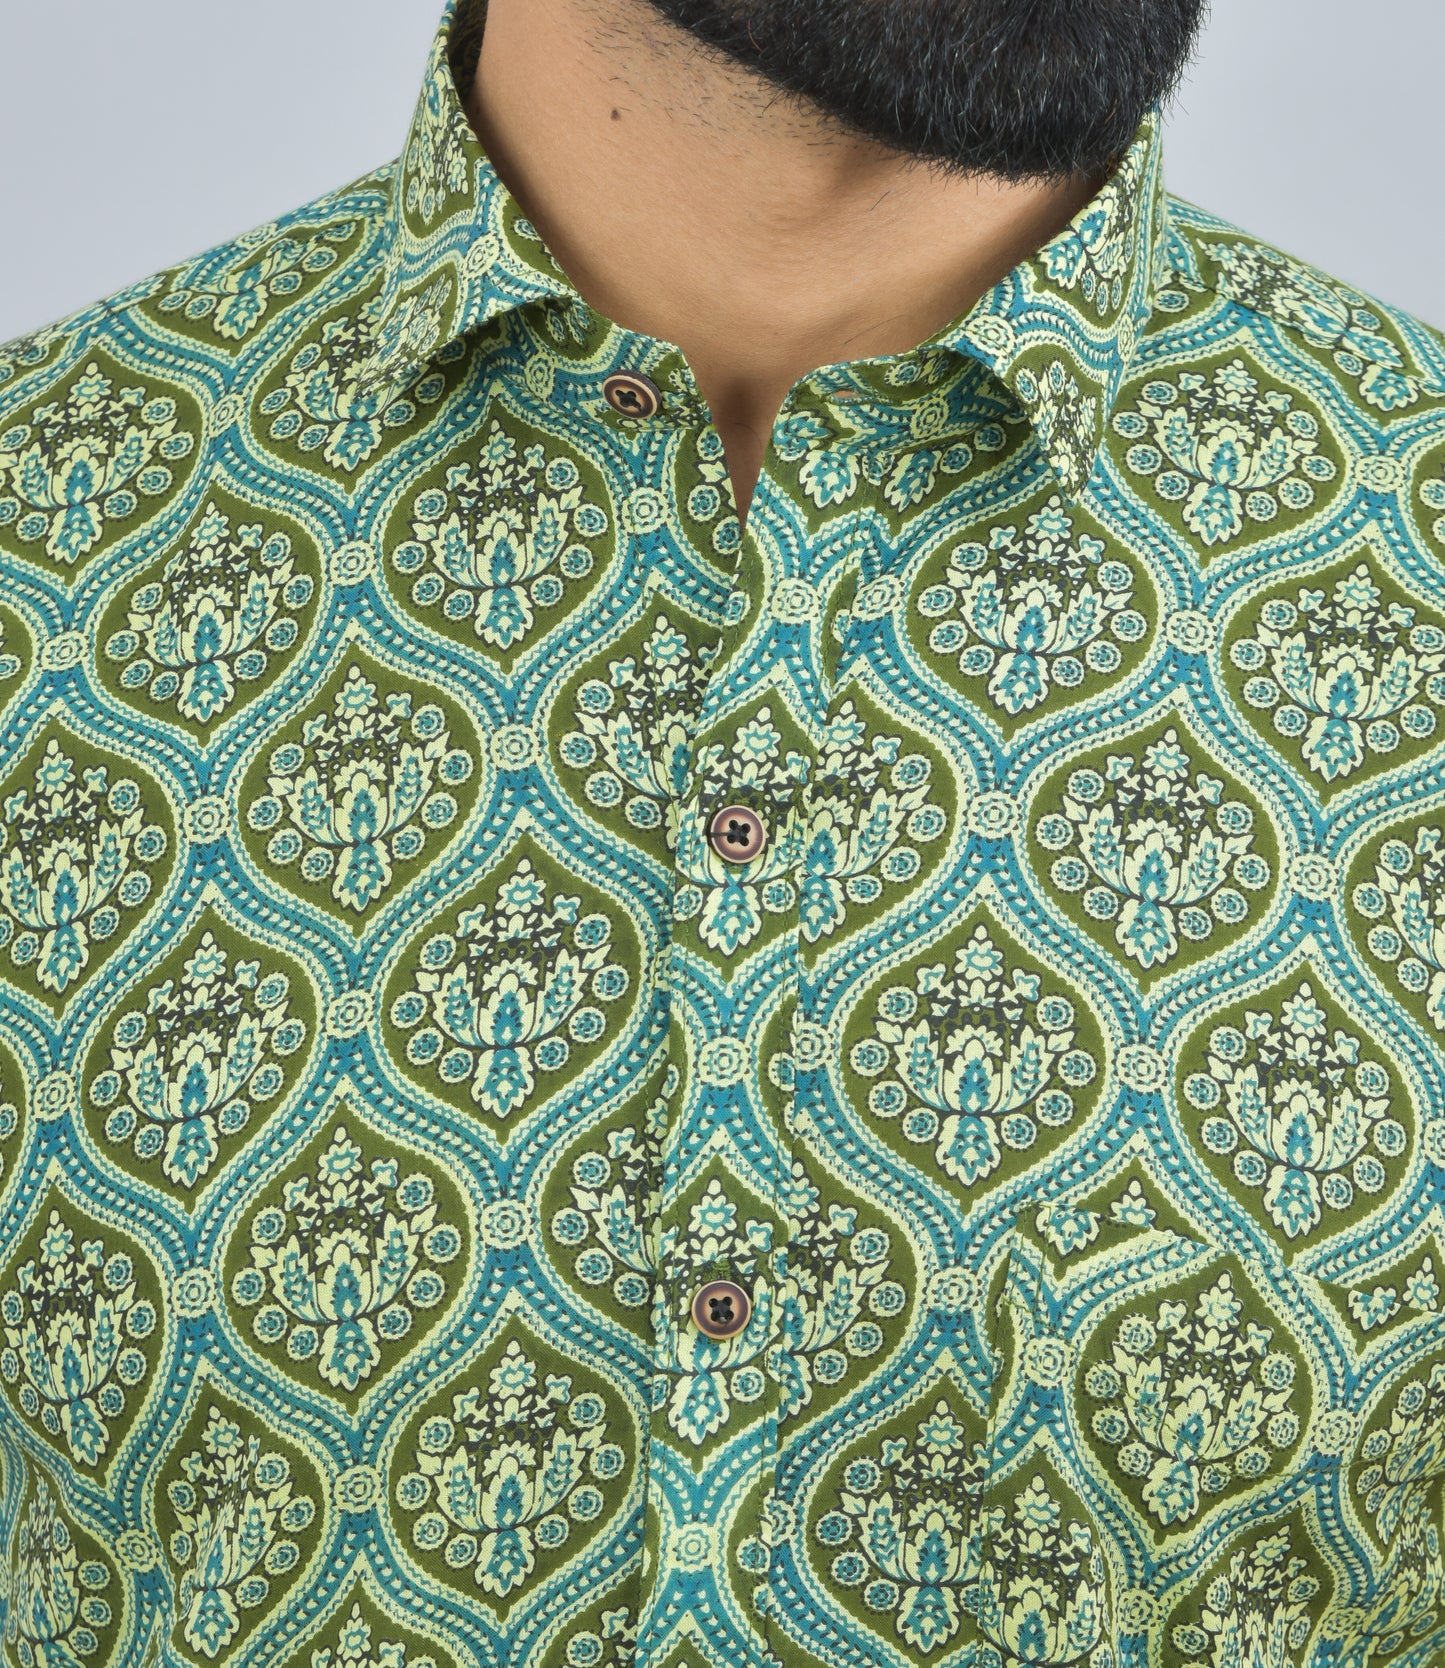 Army Green Floral Printed Cotton Half Shirt